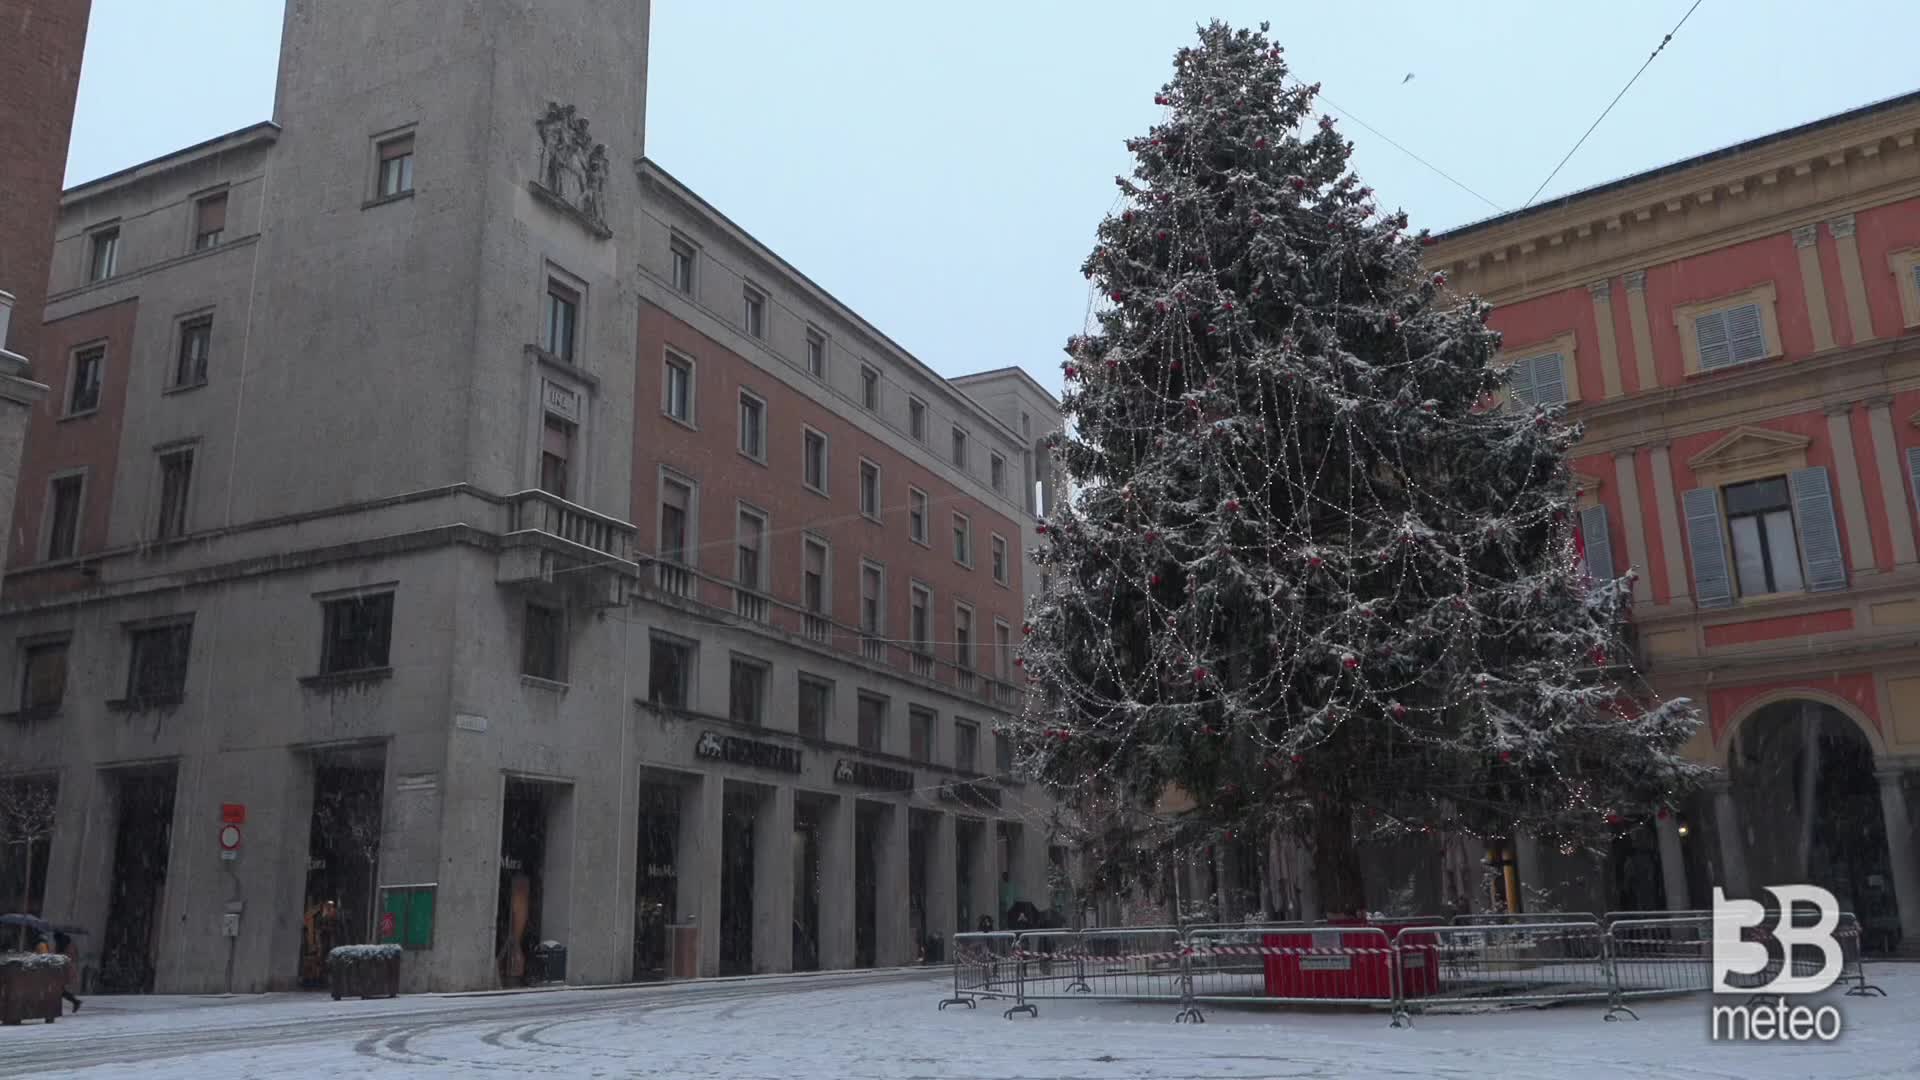 Piacenza, continua a nevicare: le immagini dal centro